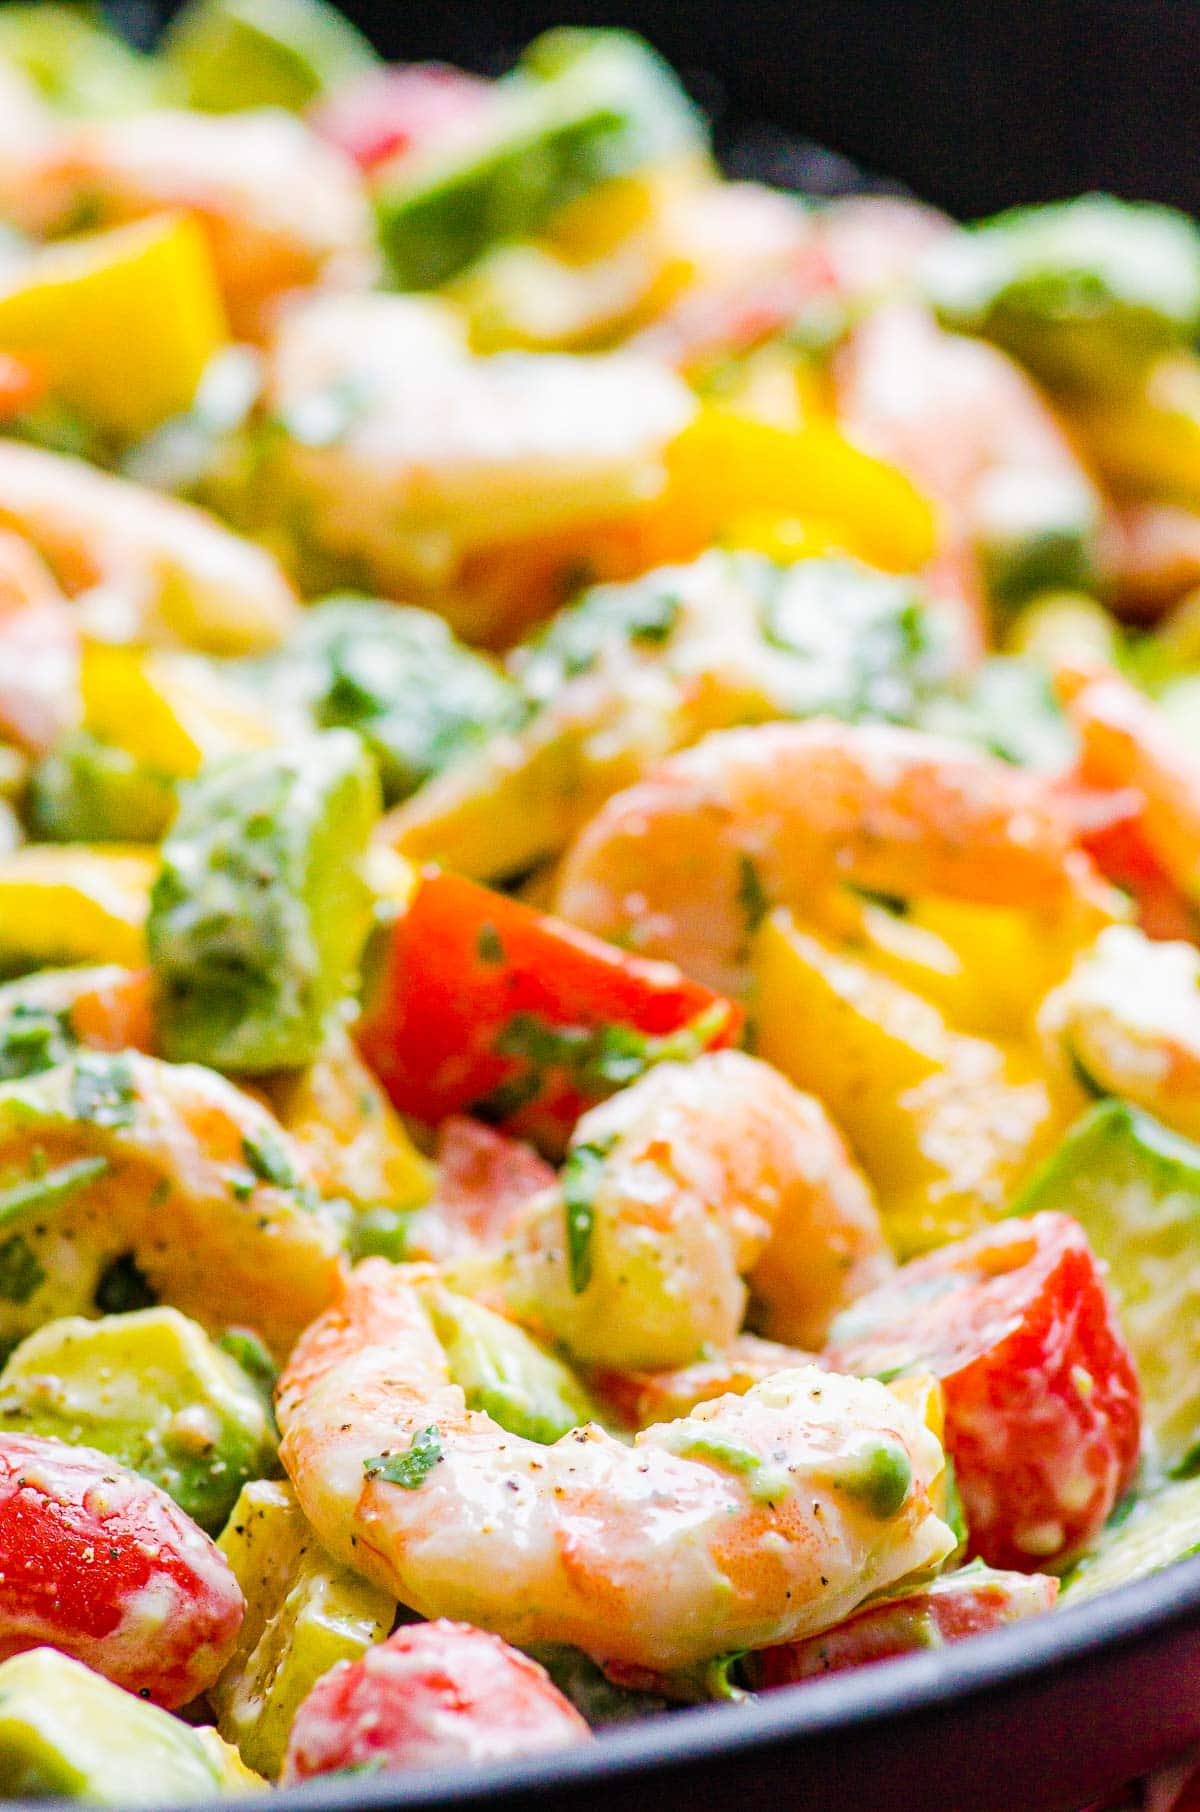 Closeup of shrimp avocado salad with tomatoes, peppers and creamy yogurt dressing.